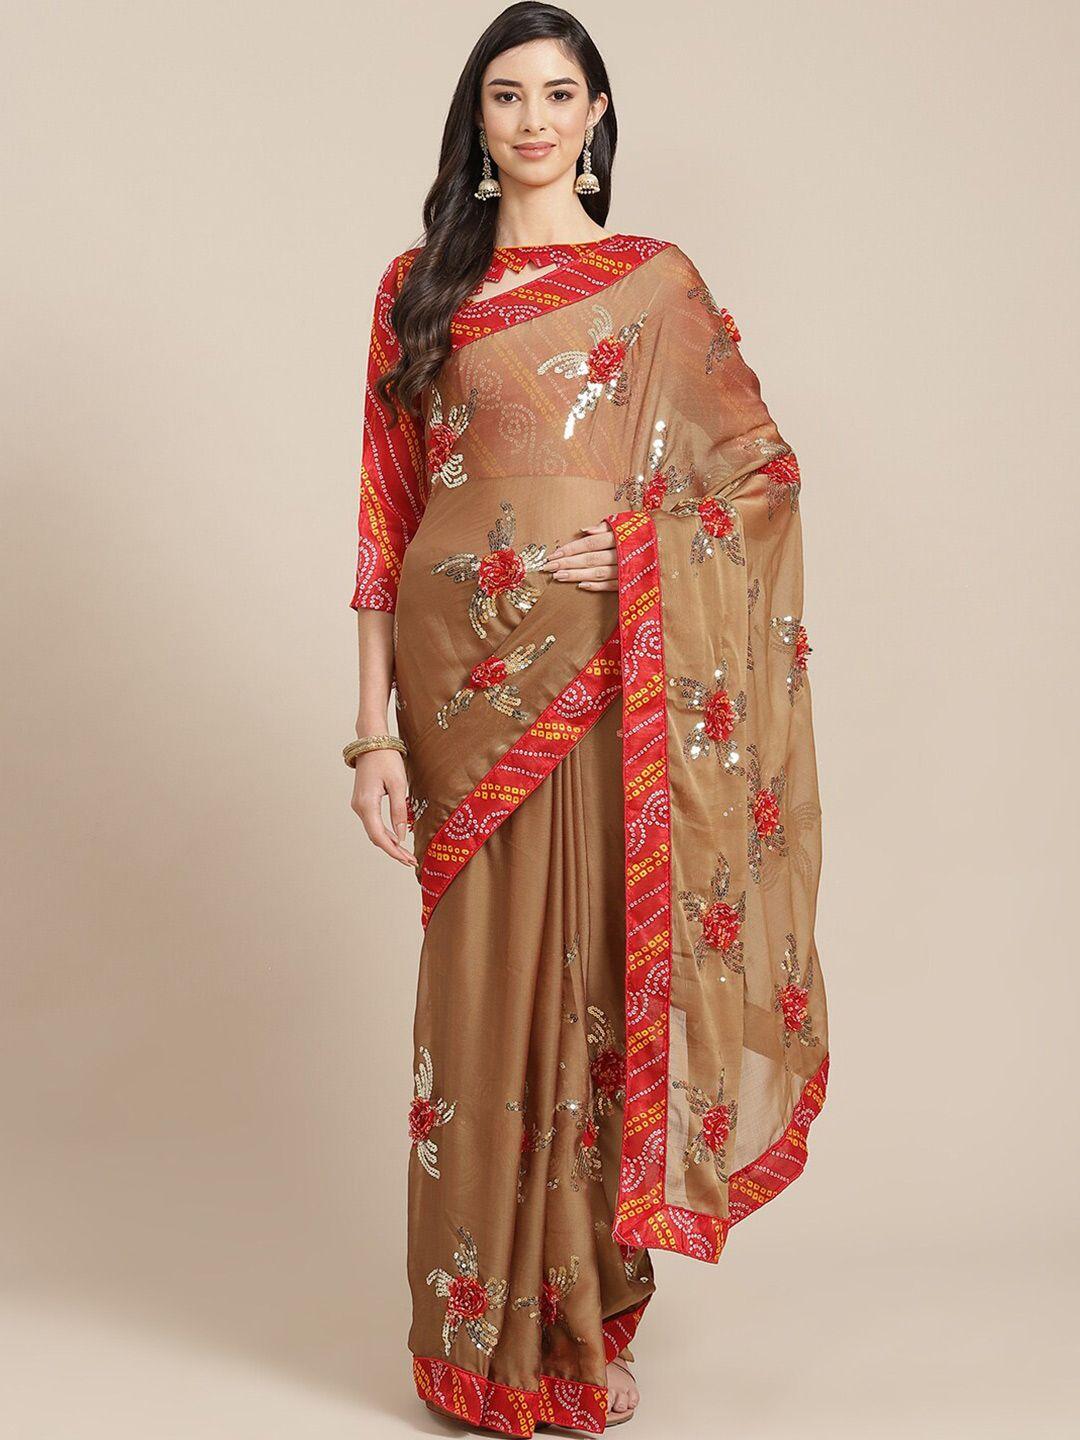 kalini sequin embellished saree